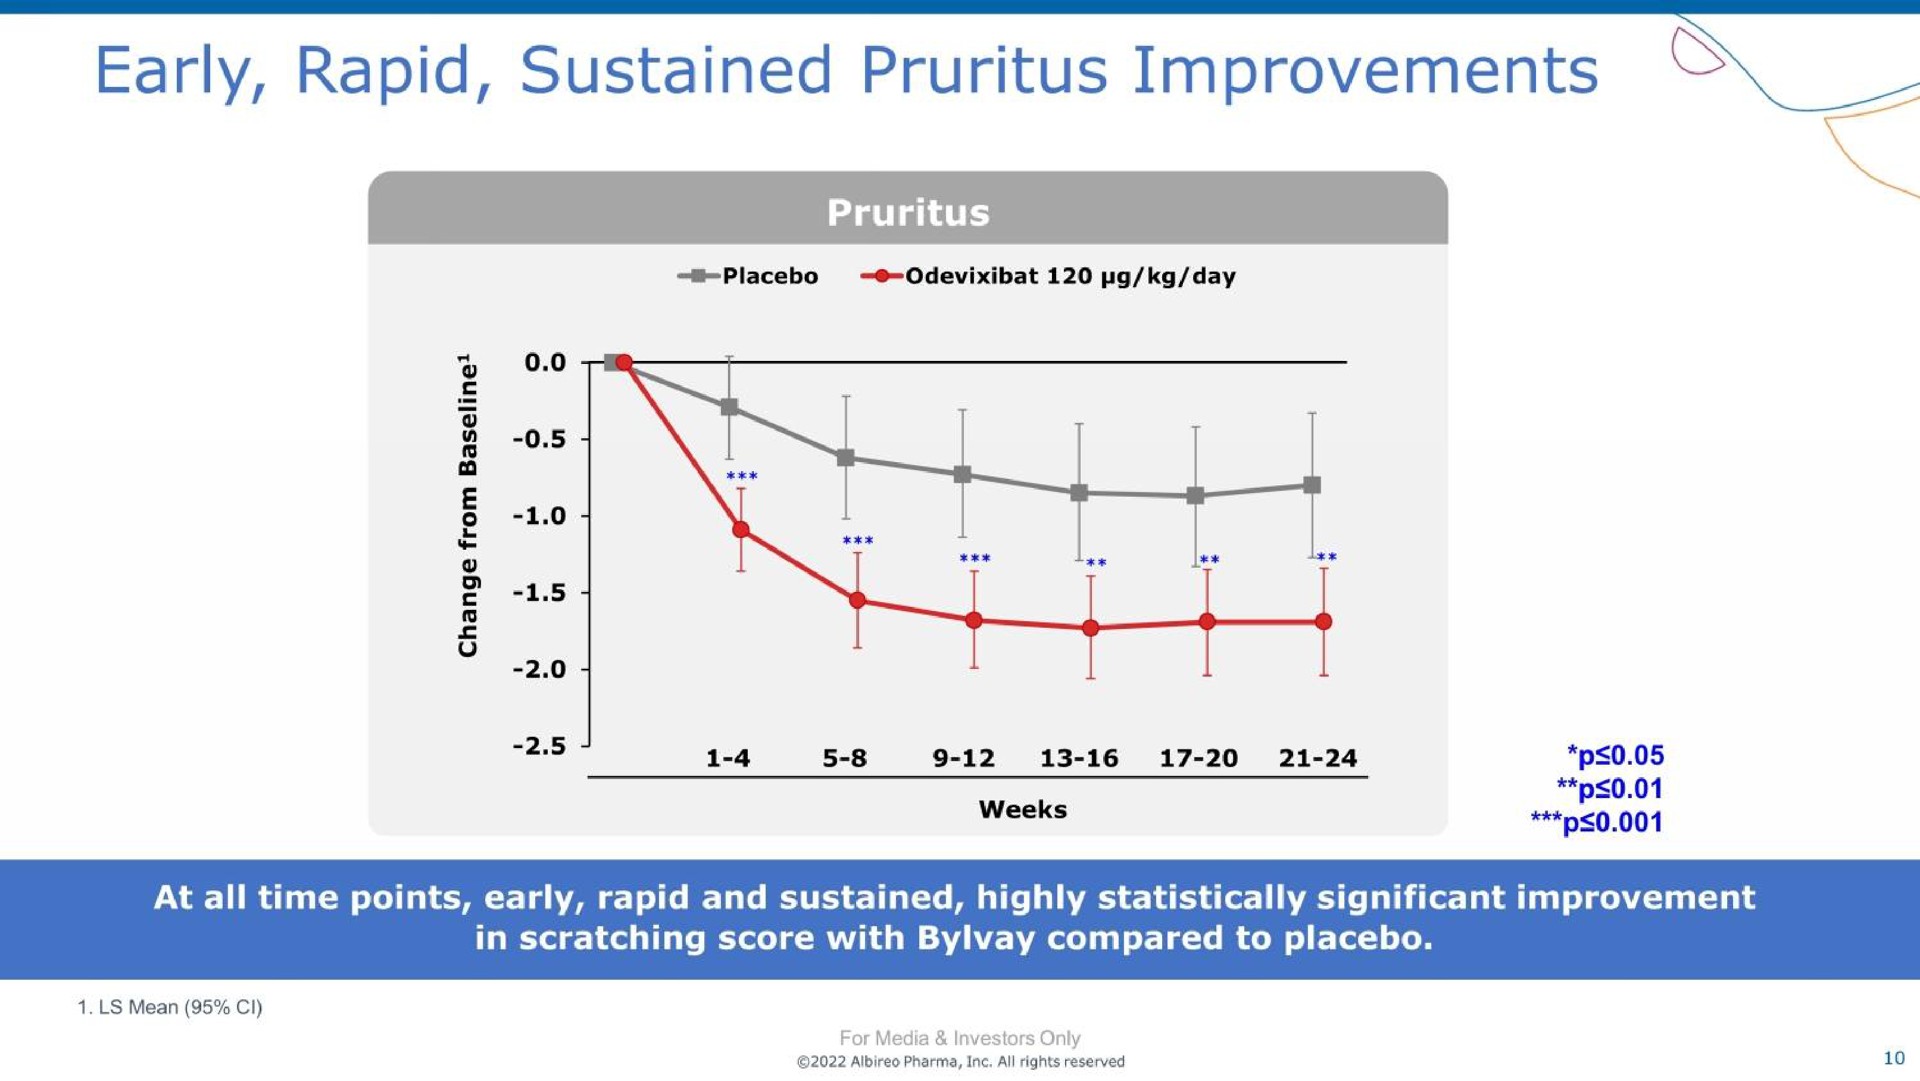 early rapid sustained pruritus improvements | Albireo Pharma